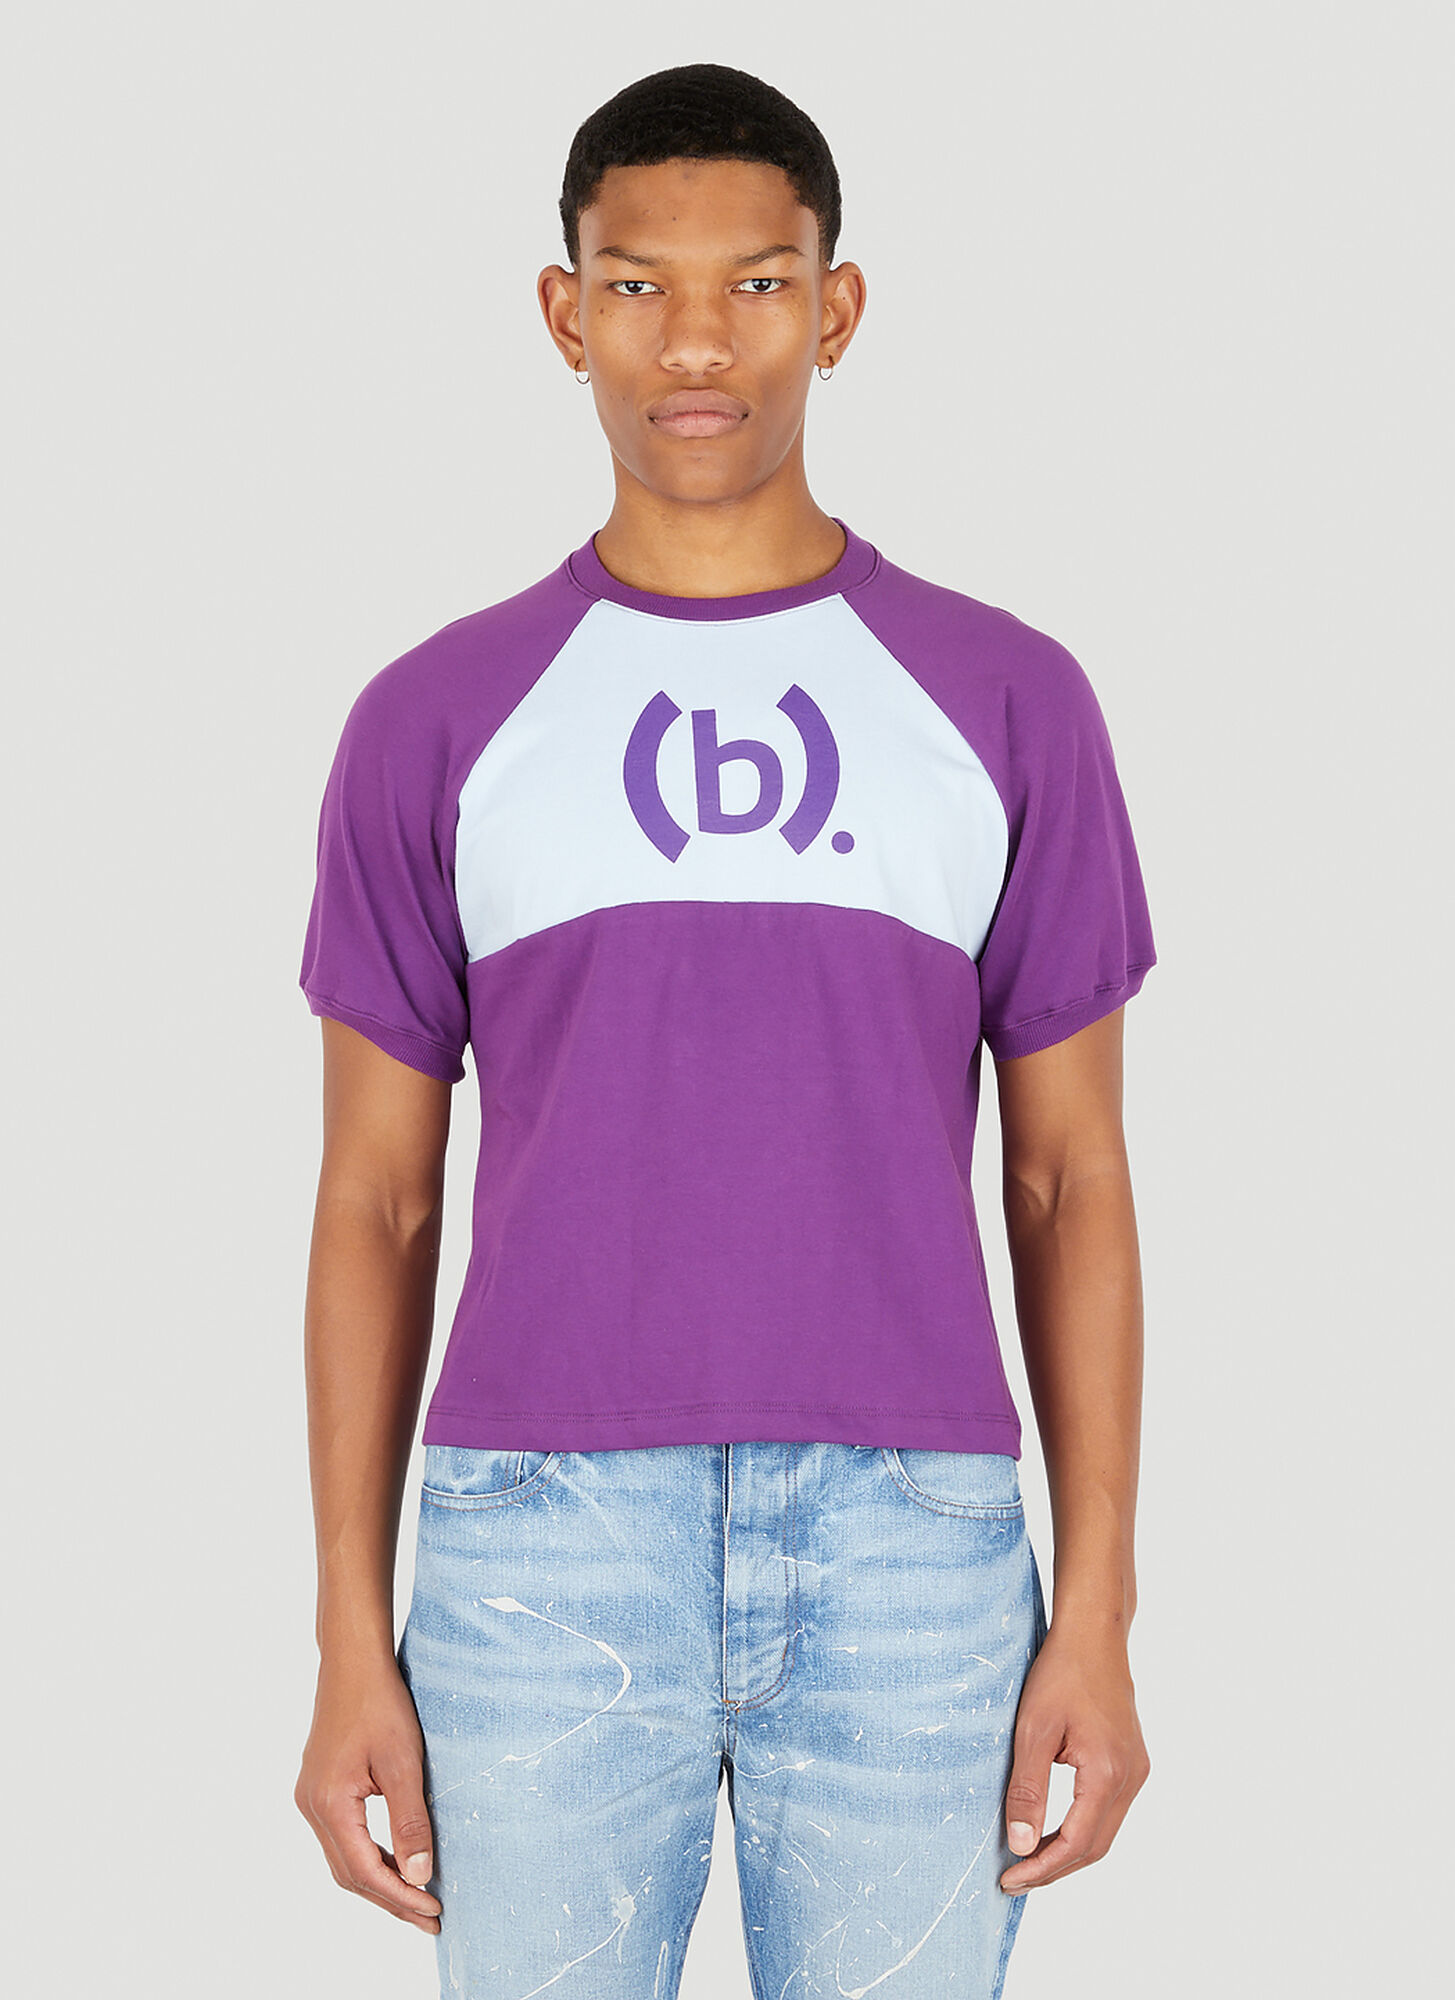 Bstroy (b). T-shirt